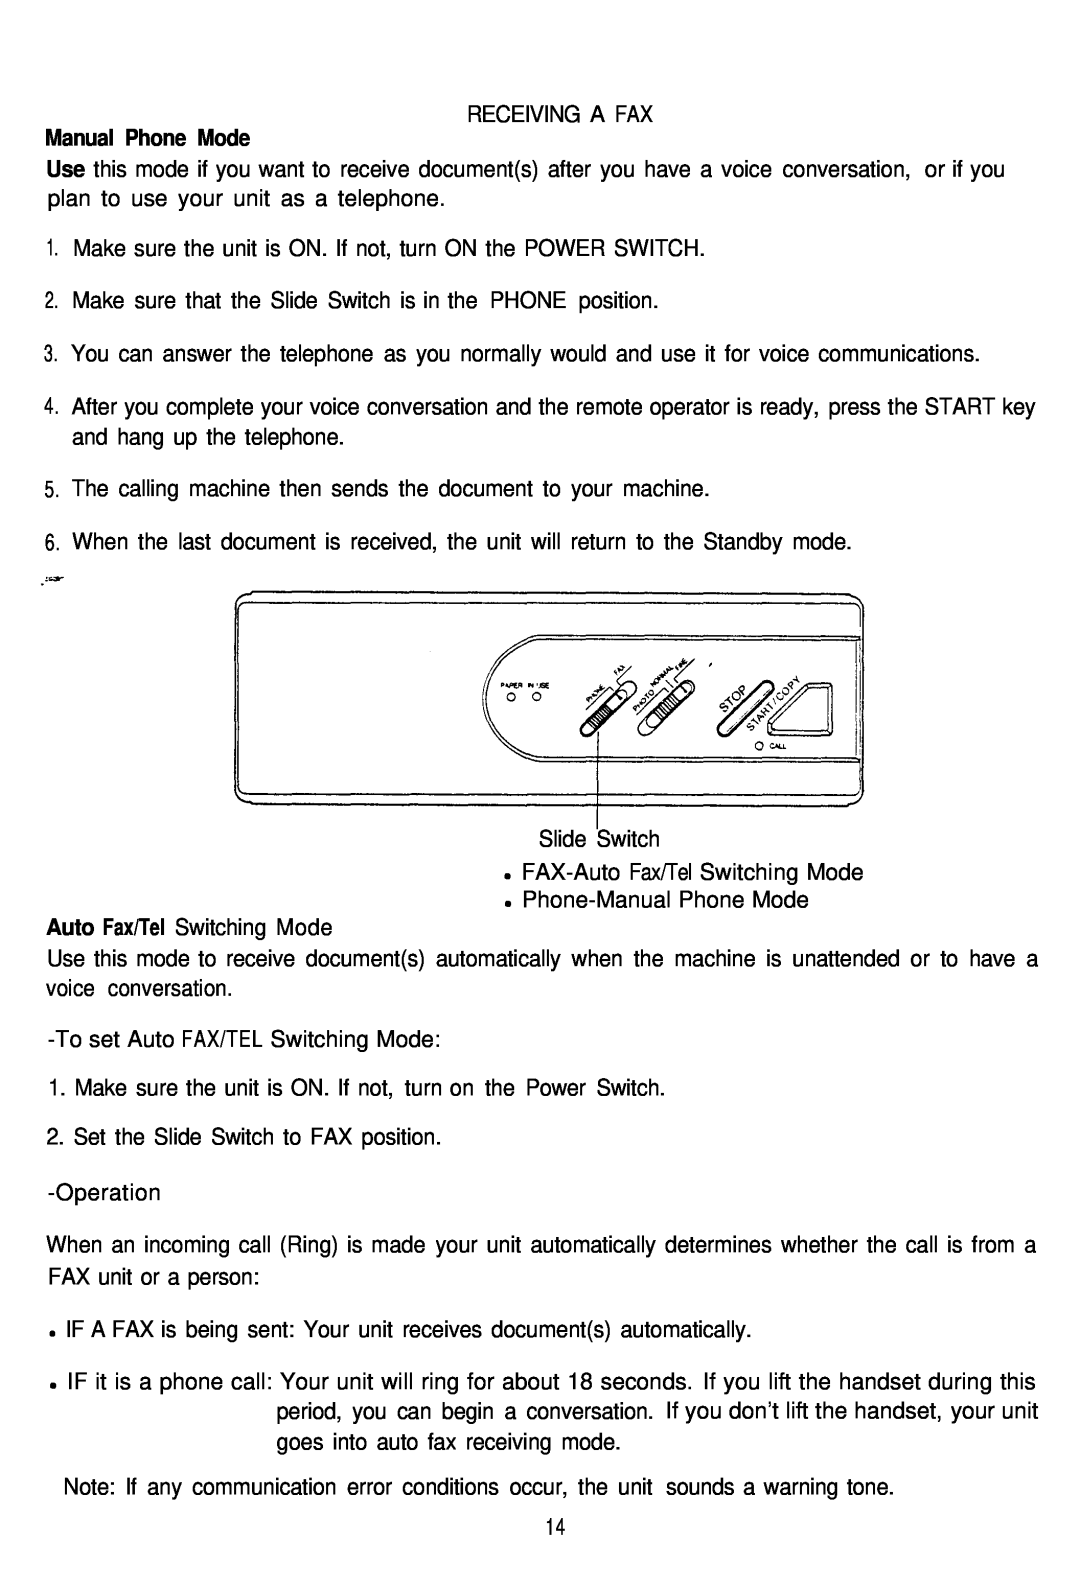 Audiovox AFX-1000 operation manual Manual Phone Mode 